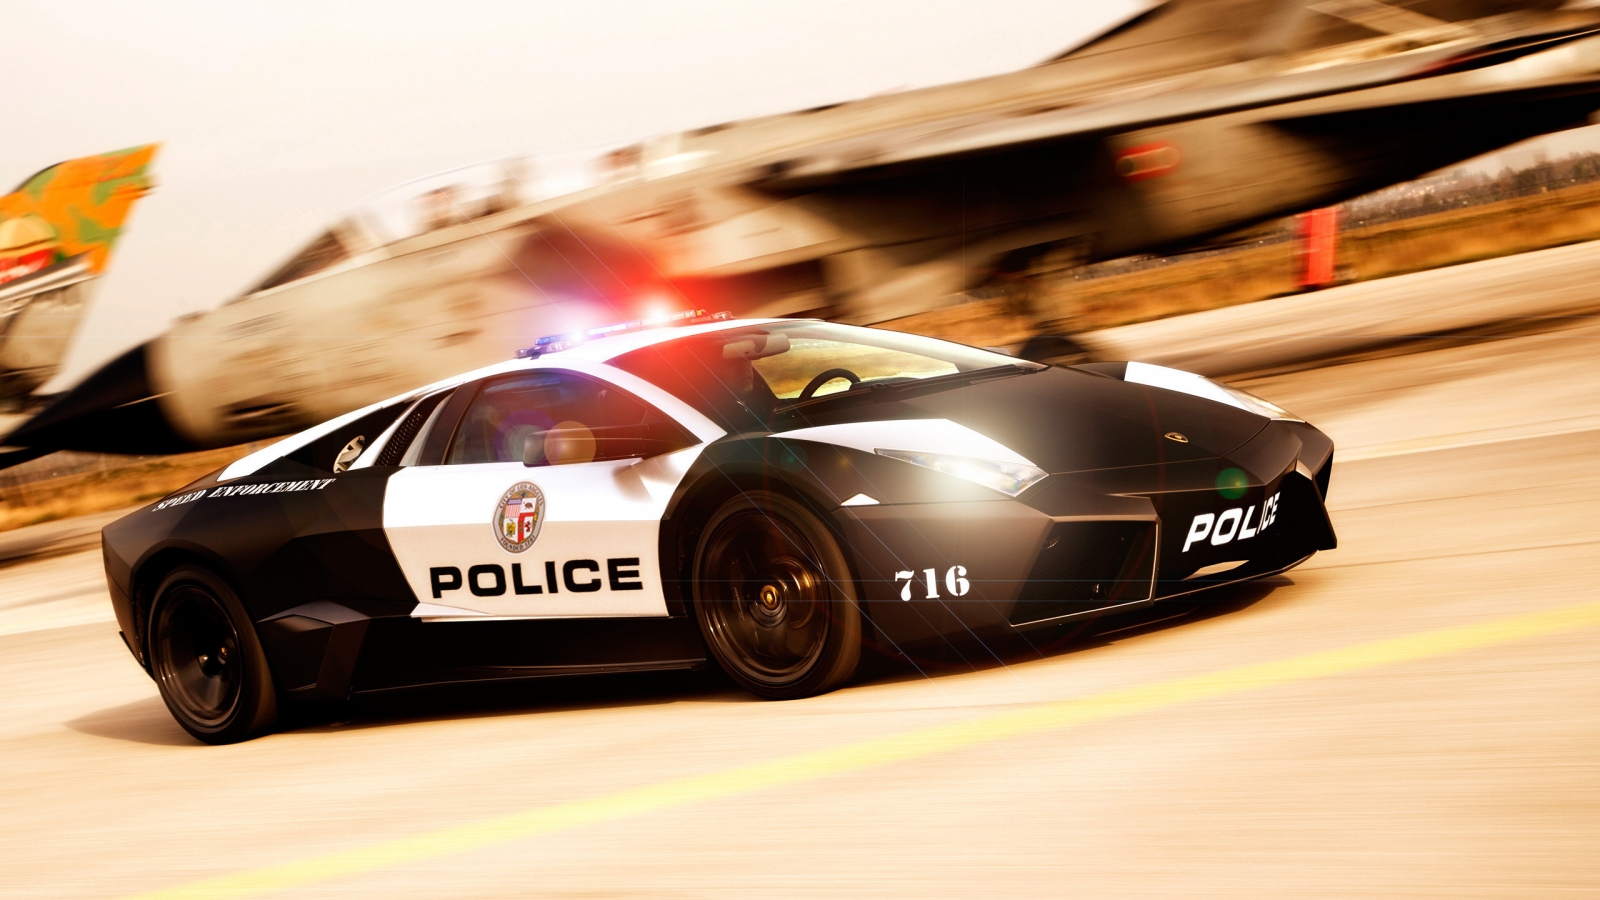 Lamborghini Police Car NFS for 1600 x 900 HDTV resolution